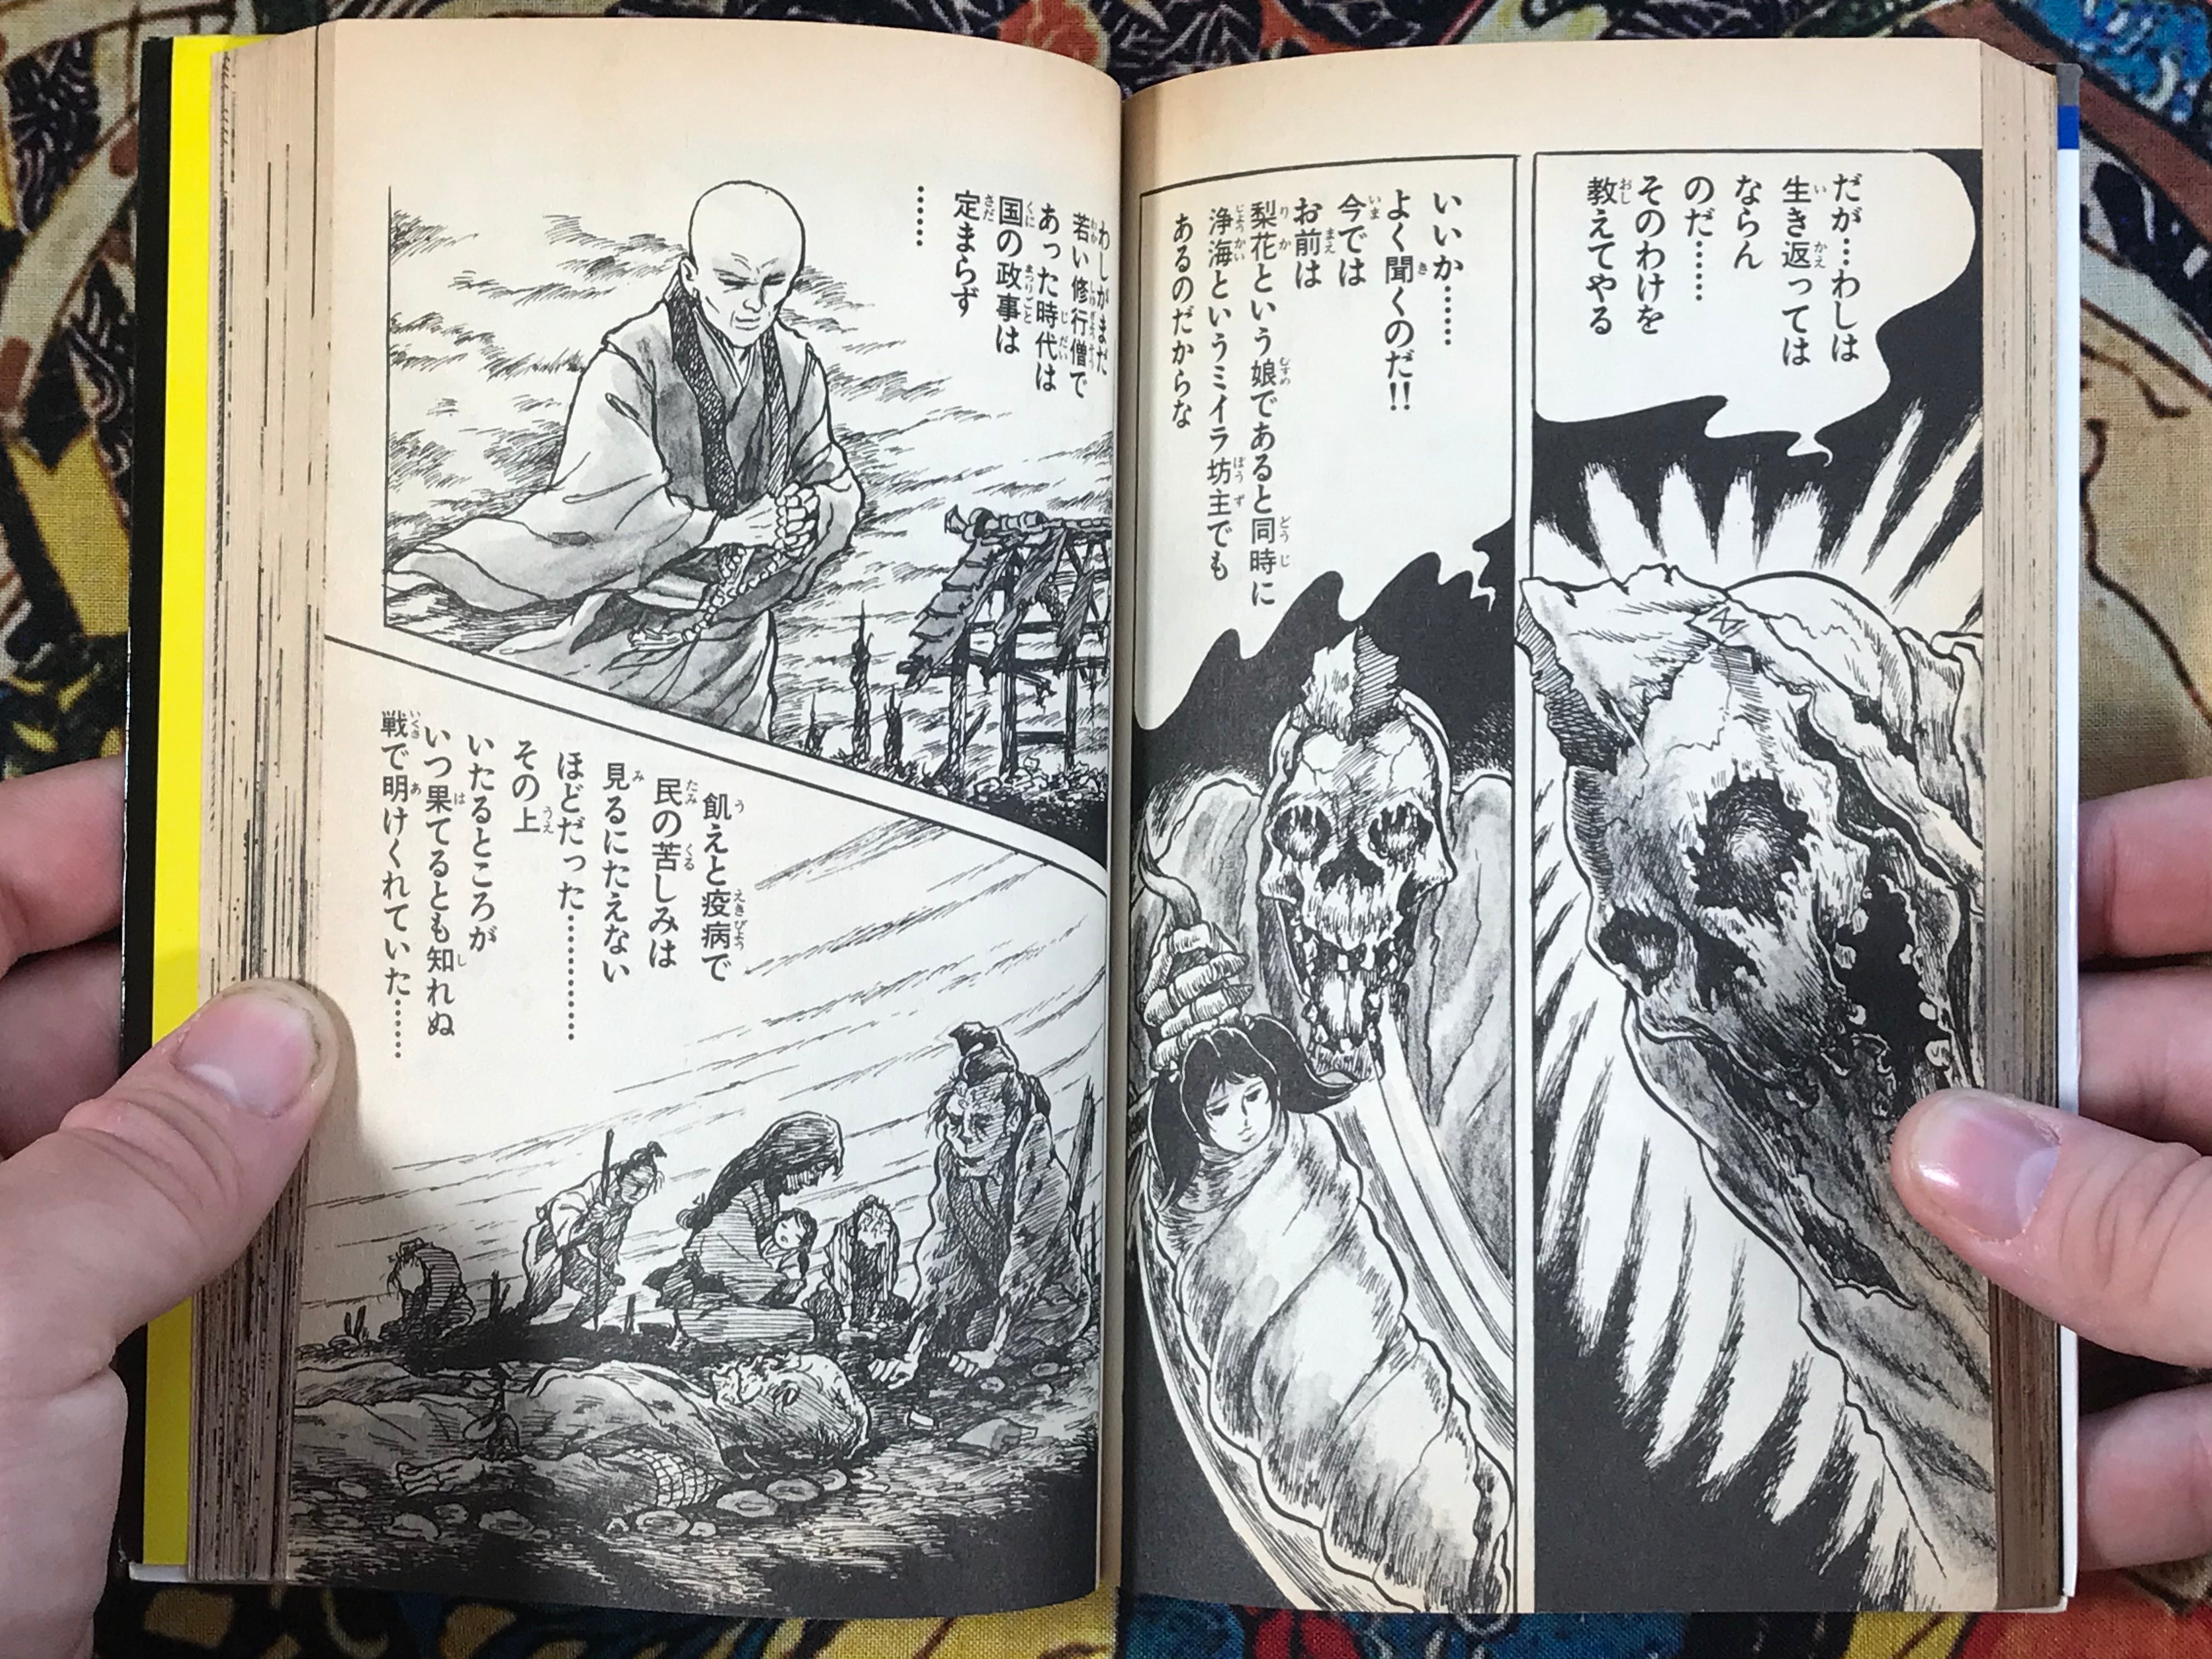 Head Line: The Revived Mummy by Yoshimi Noboru (1985)